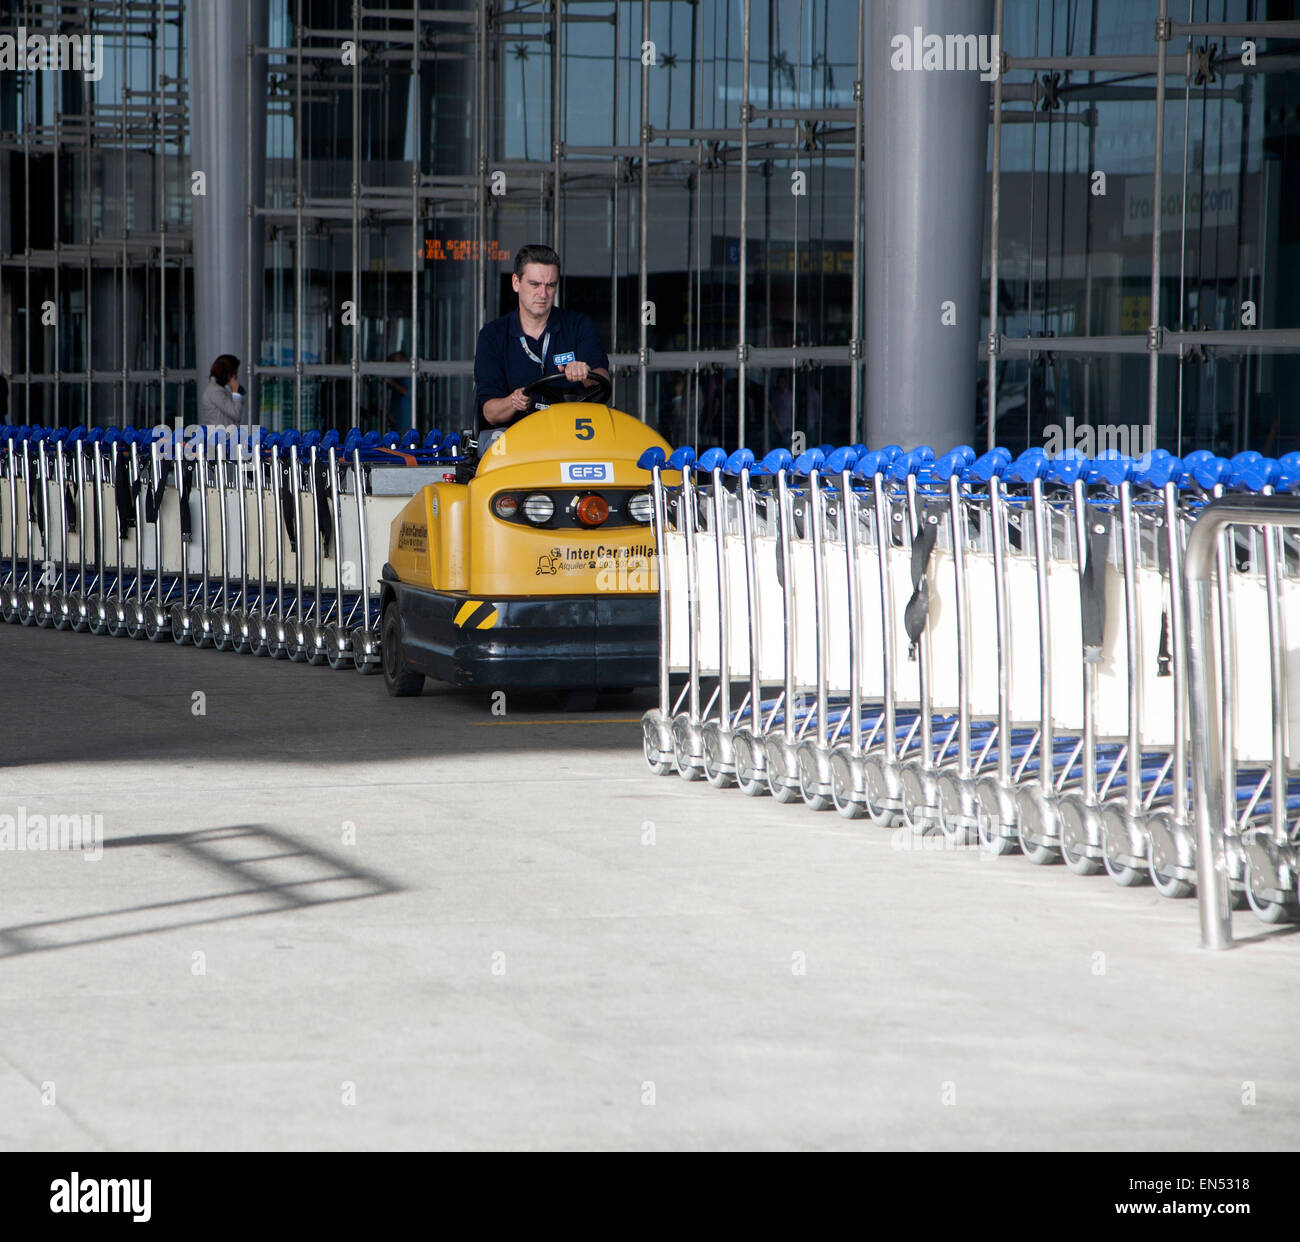 Man driving vehicle collecting trolleys at Malaga airport, Spain Stock Photo